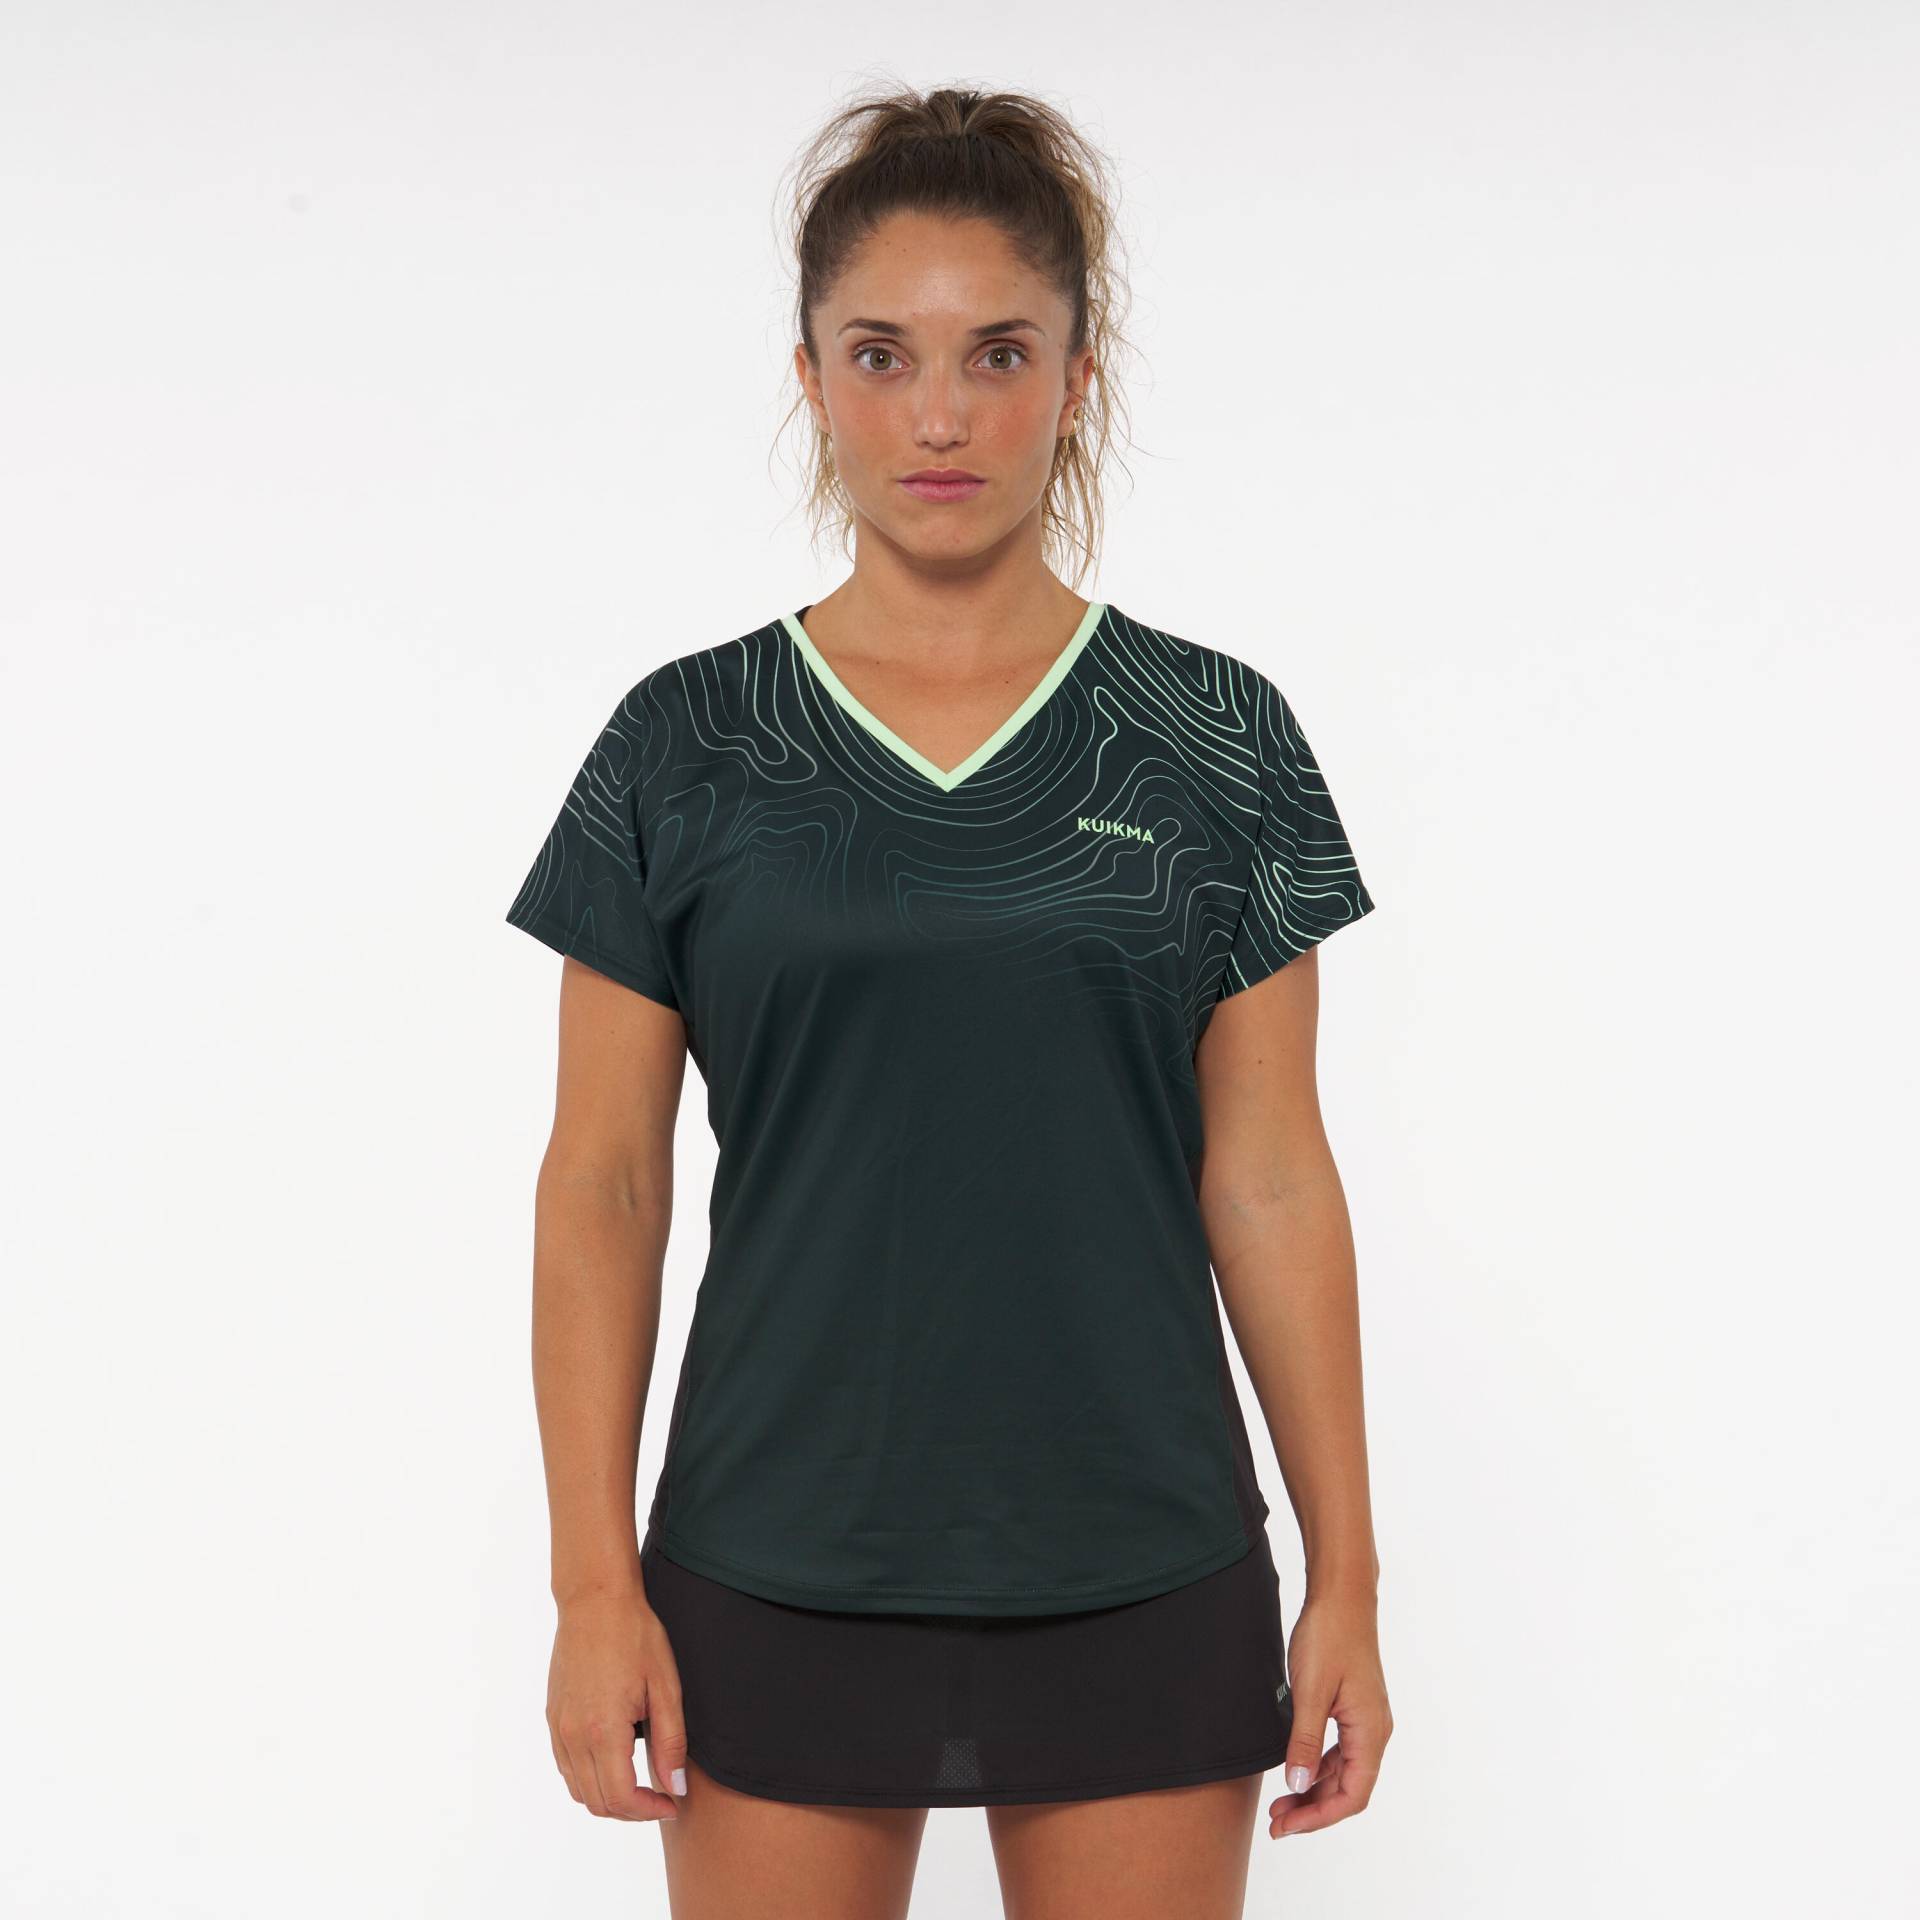 Damen Padel T-Shirt kurzarm atmungsaktiv - PTS 500 grün von KUIKMA